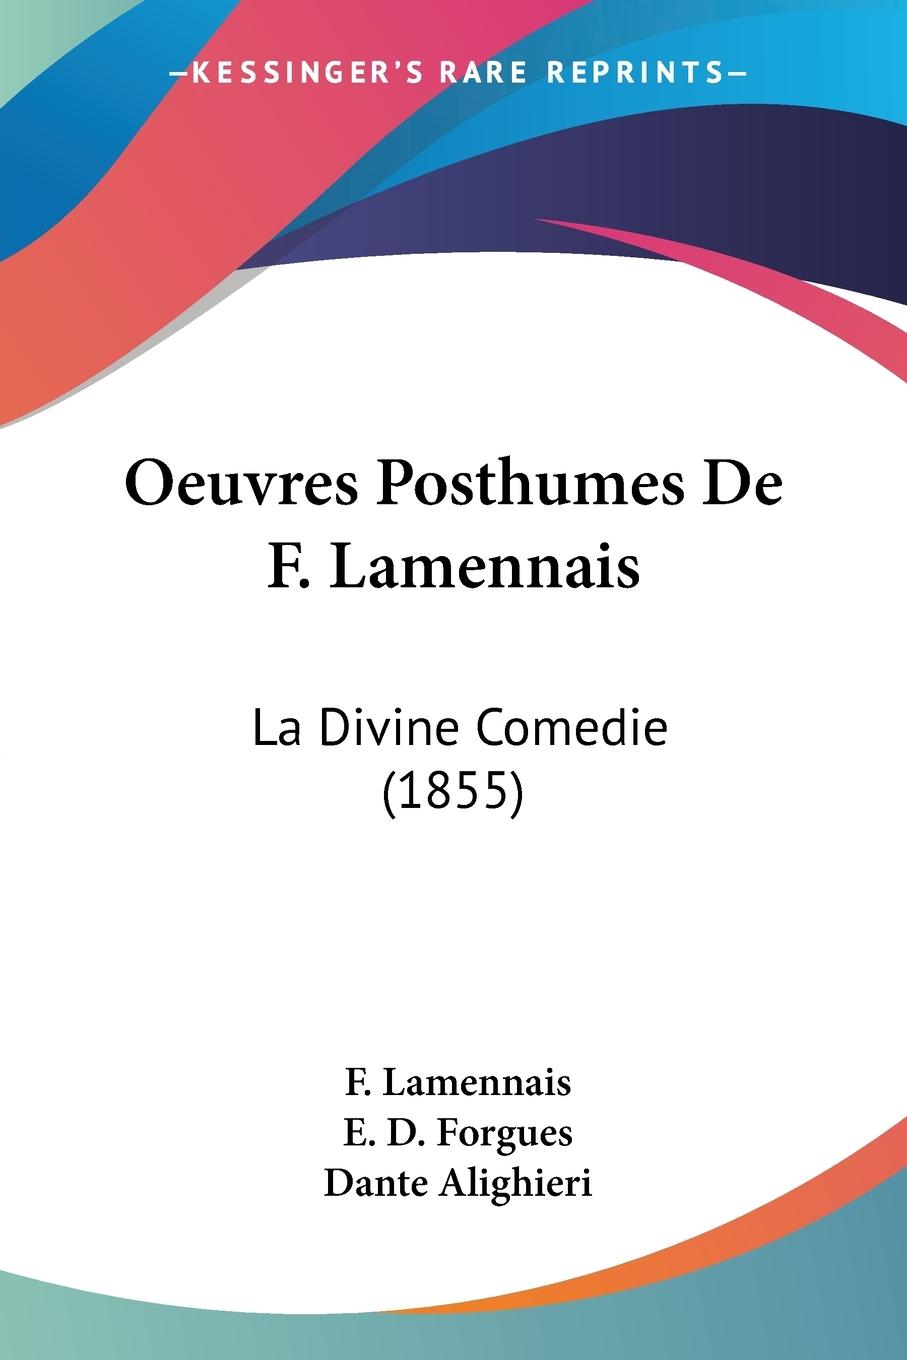 Oeuvres Posthumes De F. Lamennais - Lamennais, F. Forgues, E. D. Alighieri, Dante